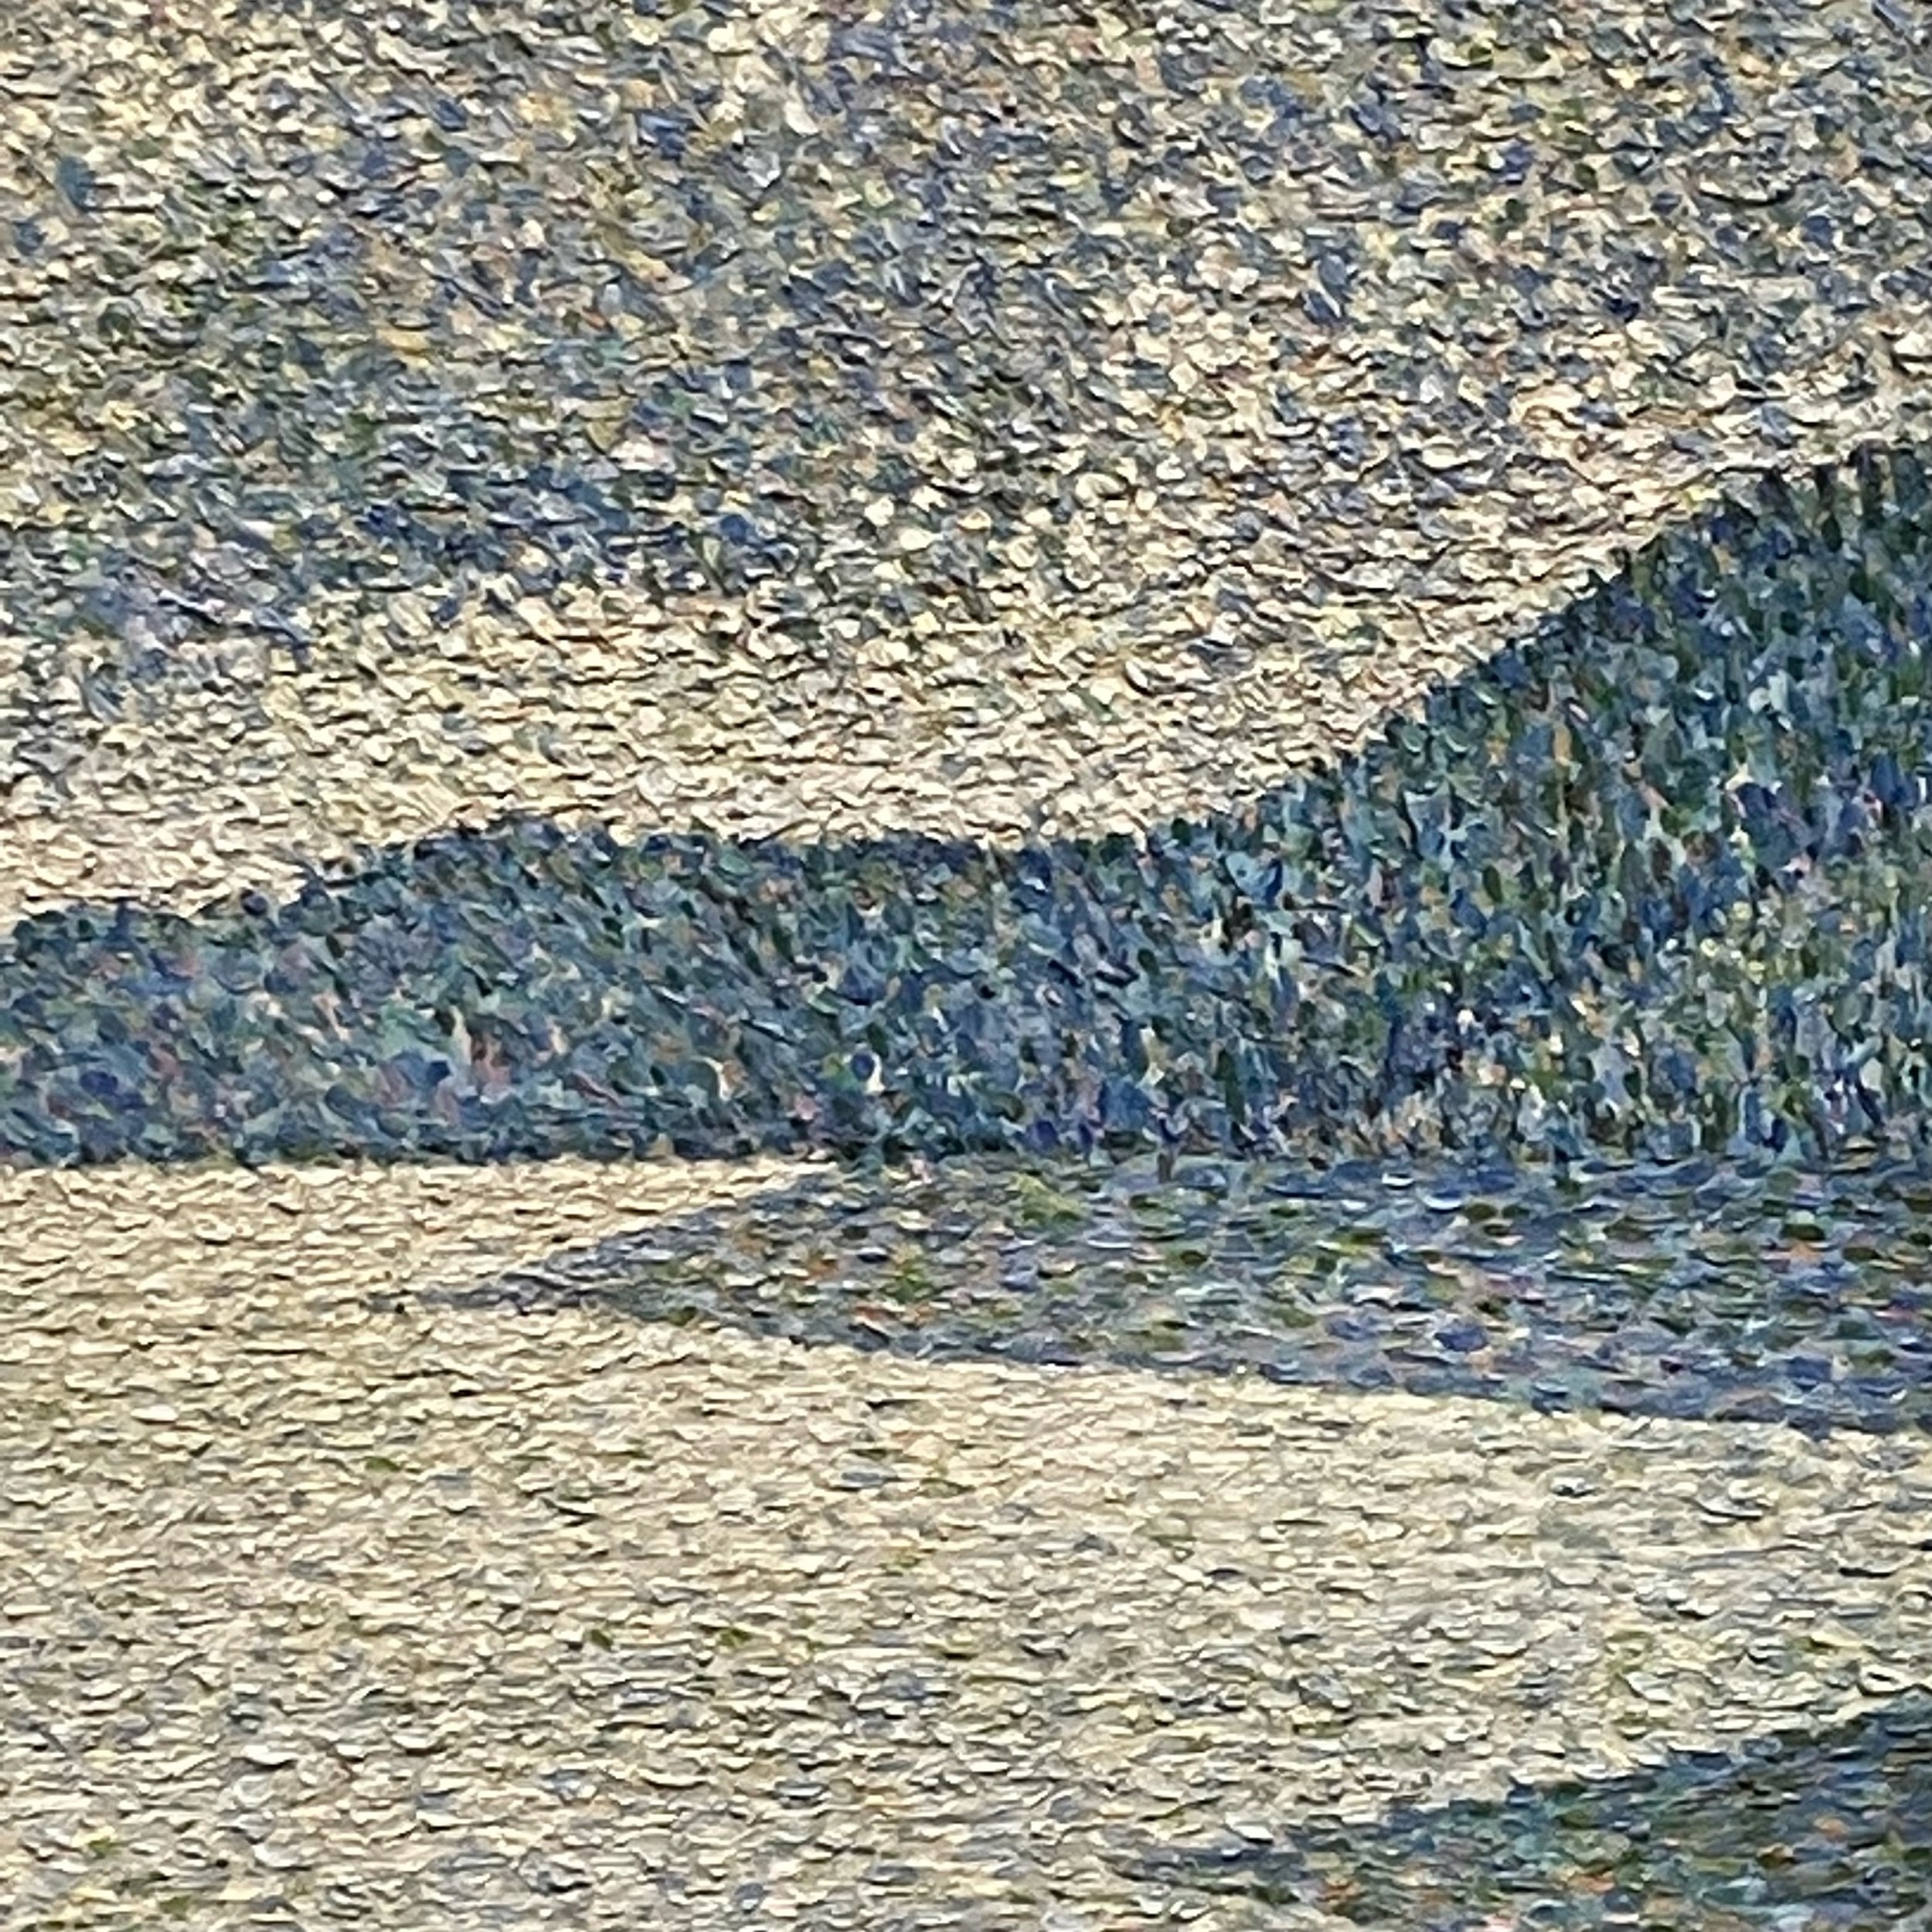 Coastal Scene detail